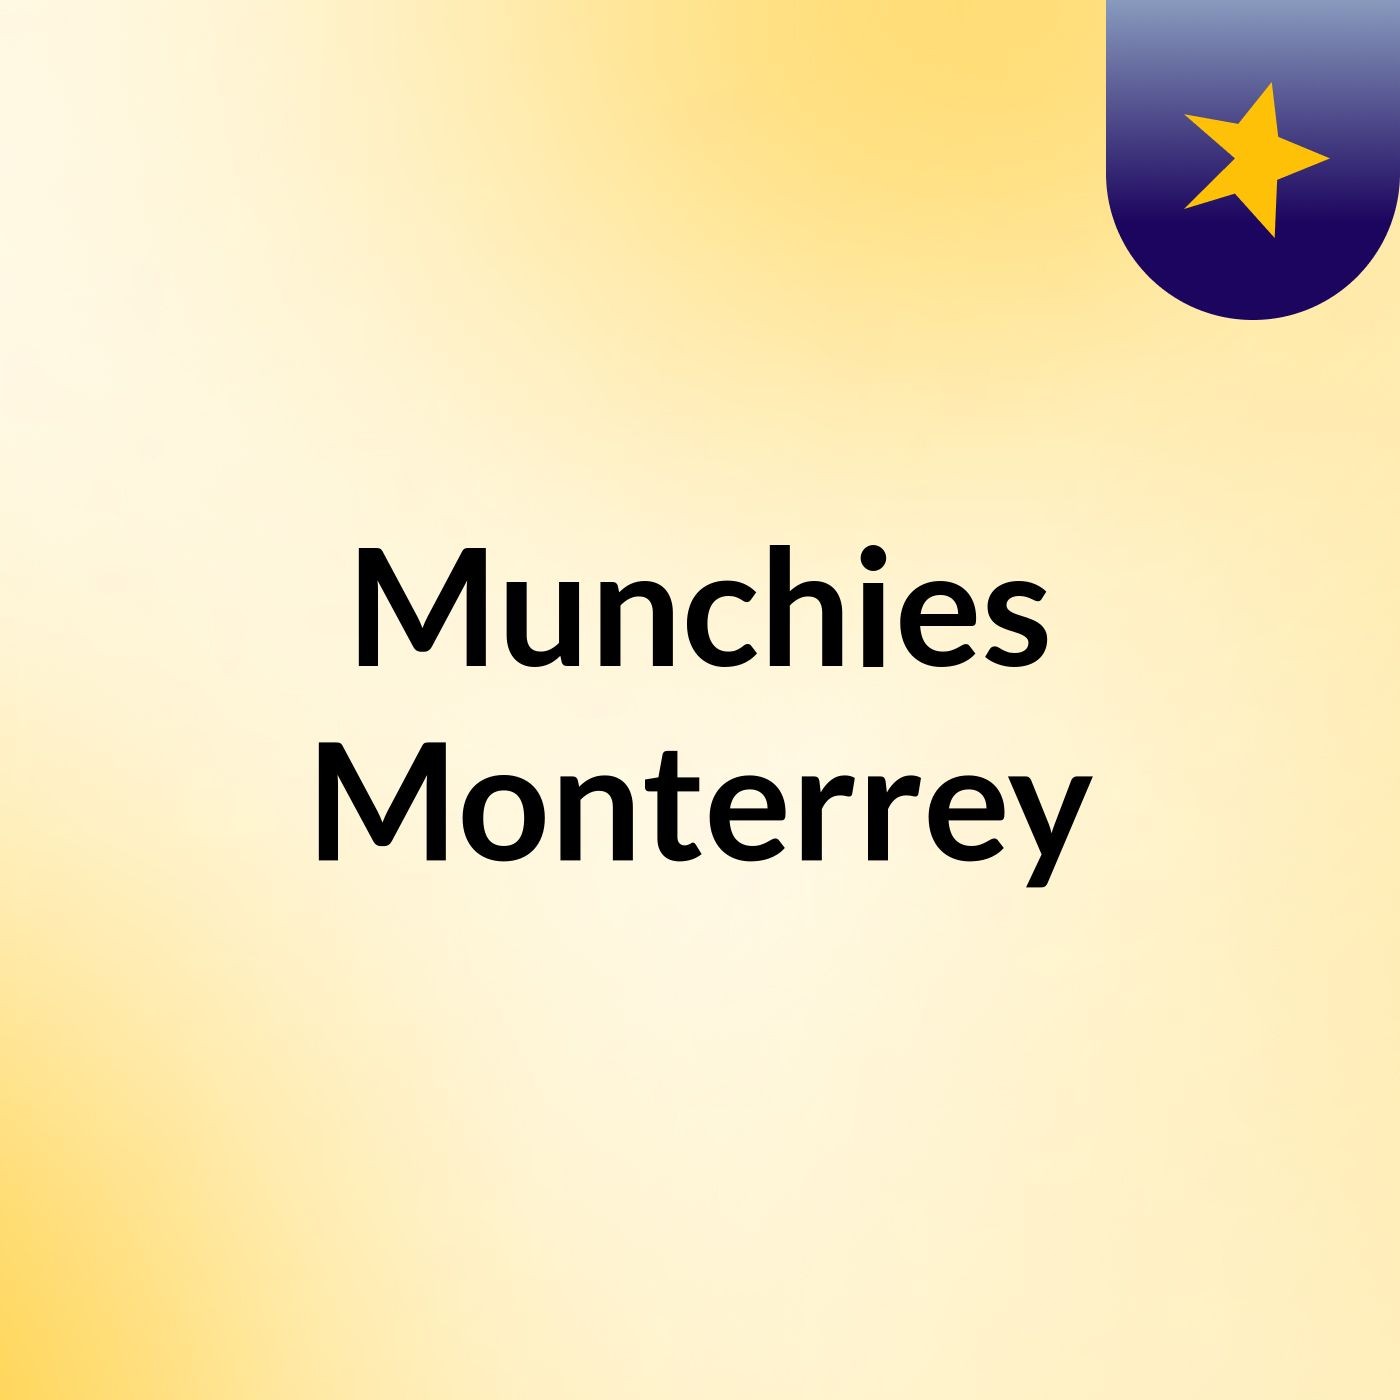 Munchies Monterrey